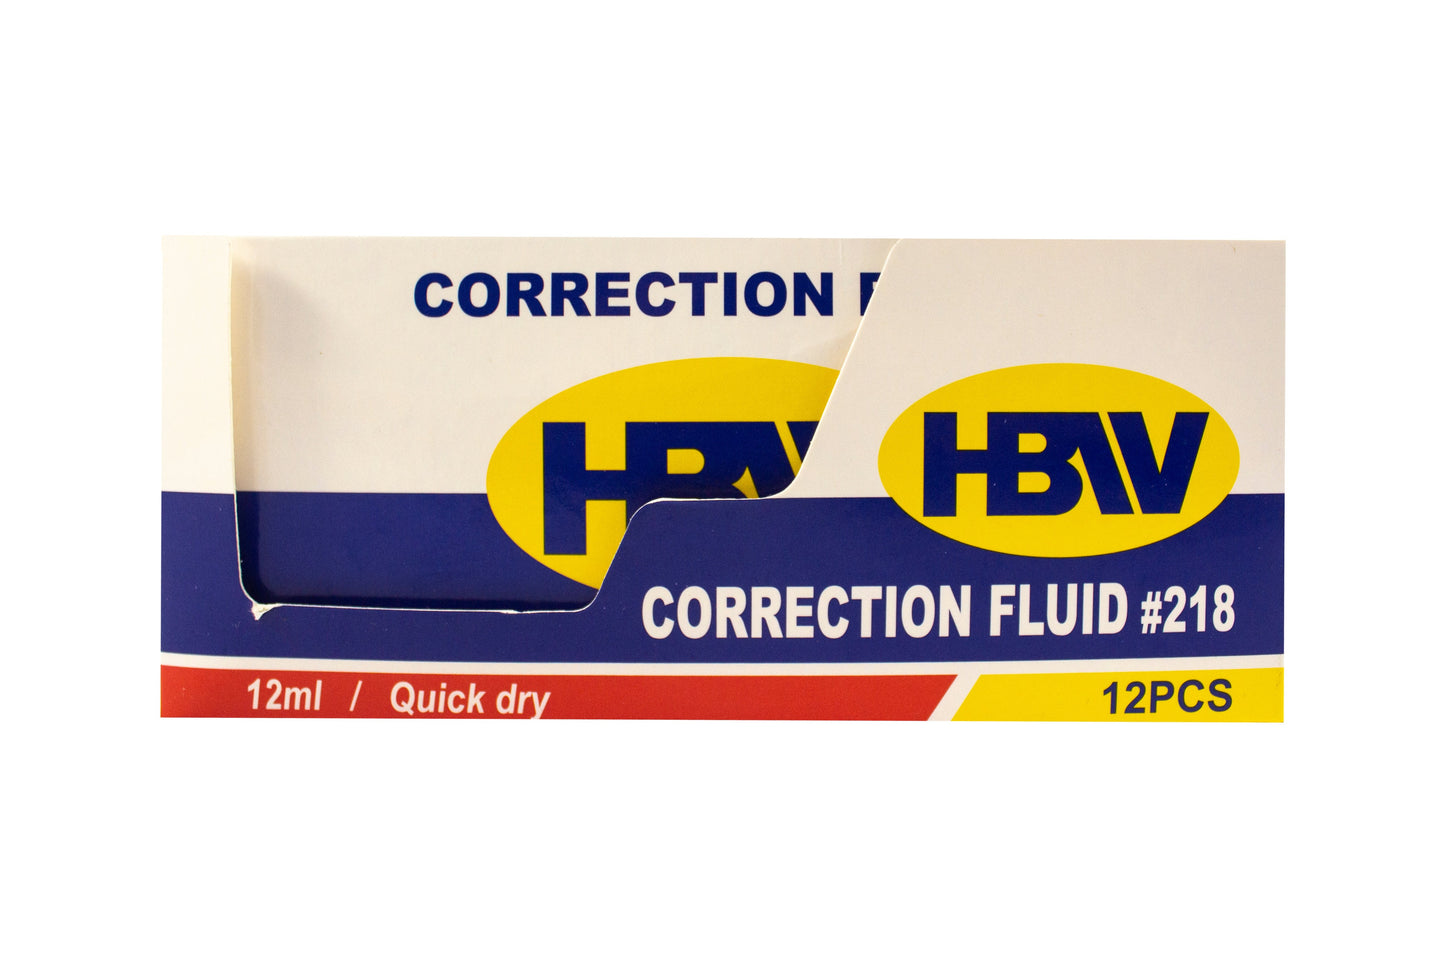 HBW Correction Fluid No. 218 12ml (12pcs)